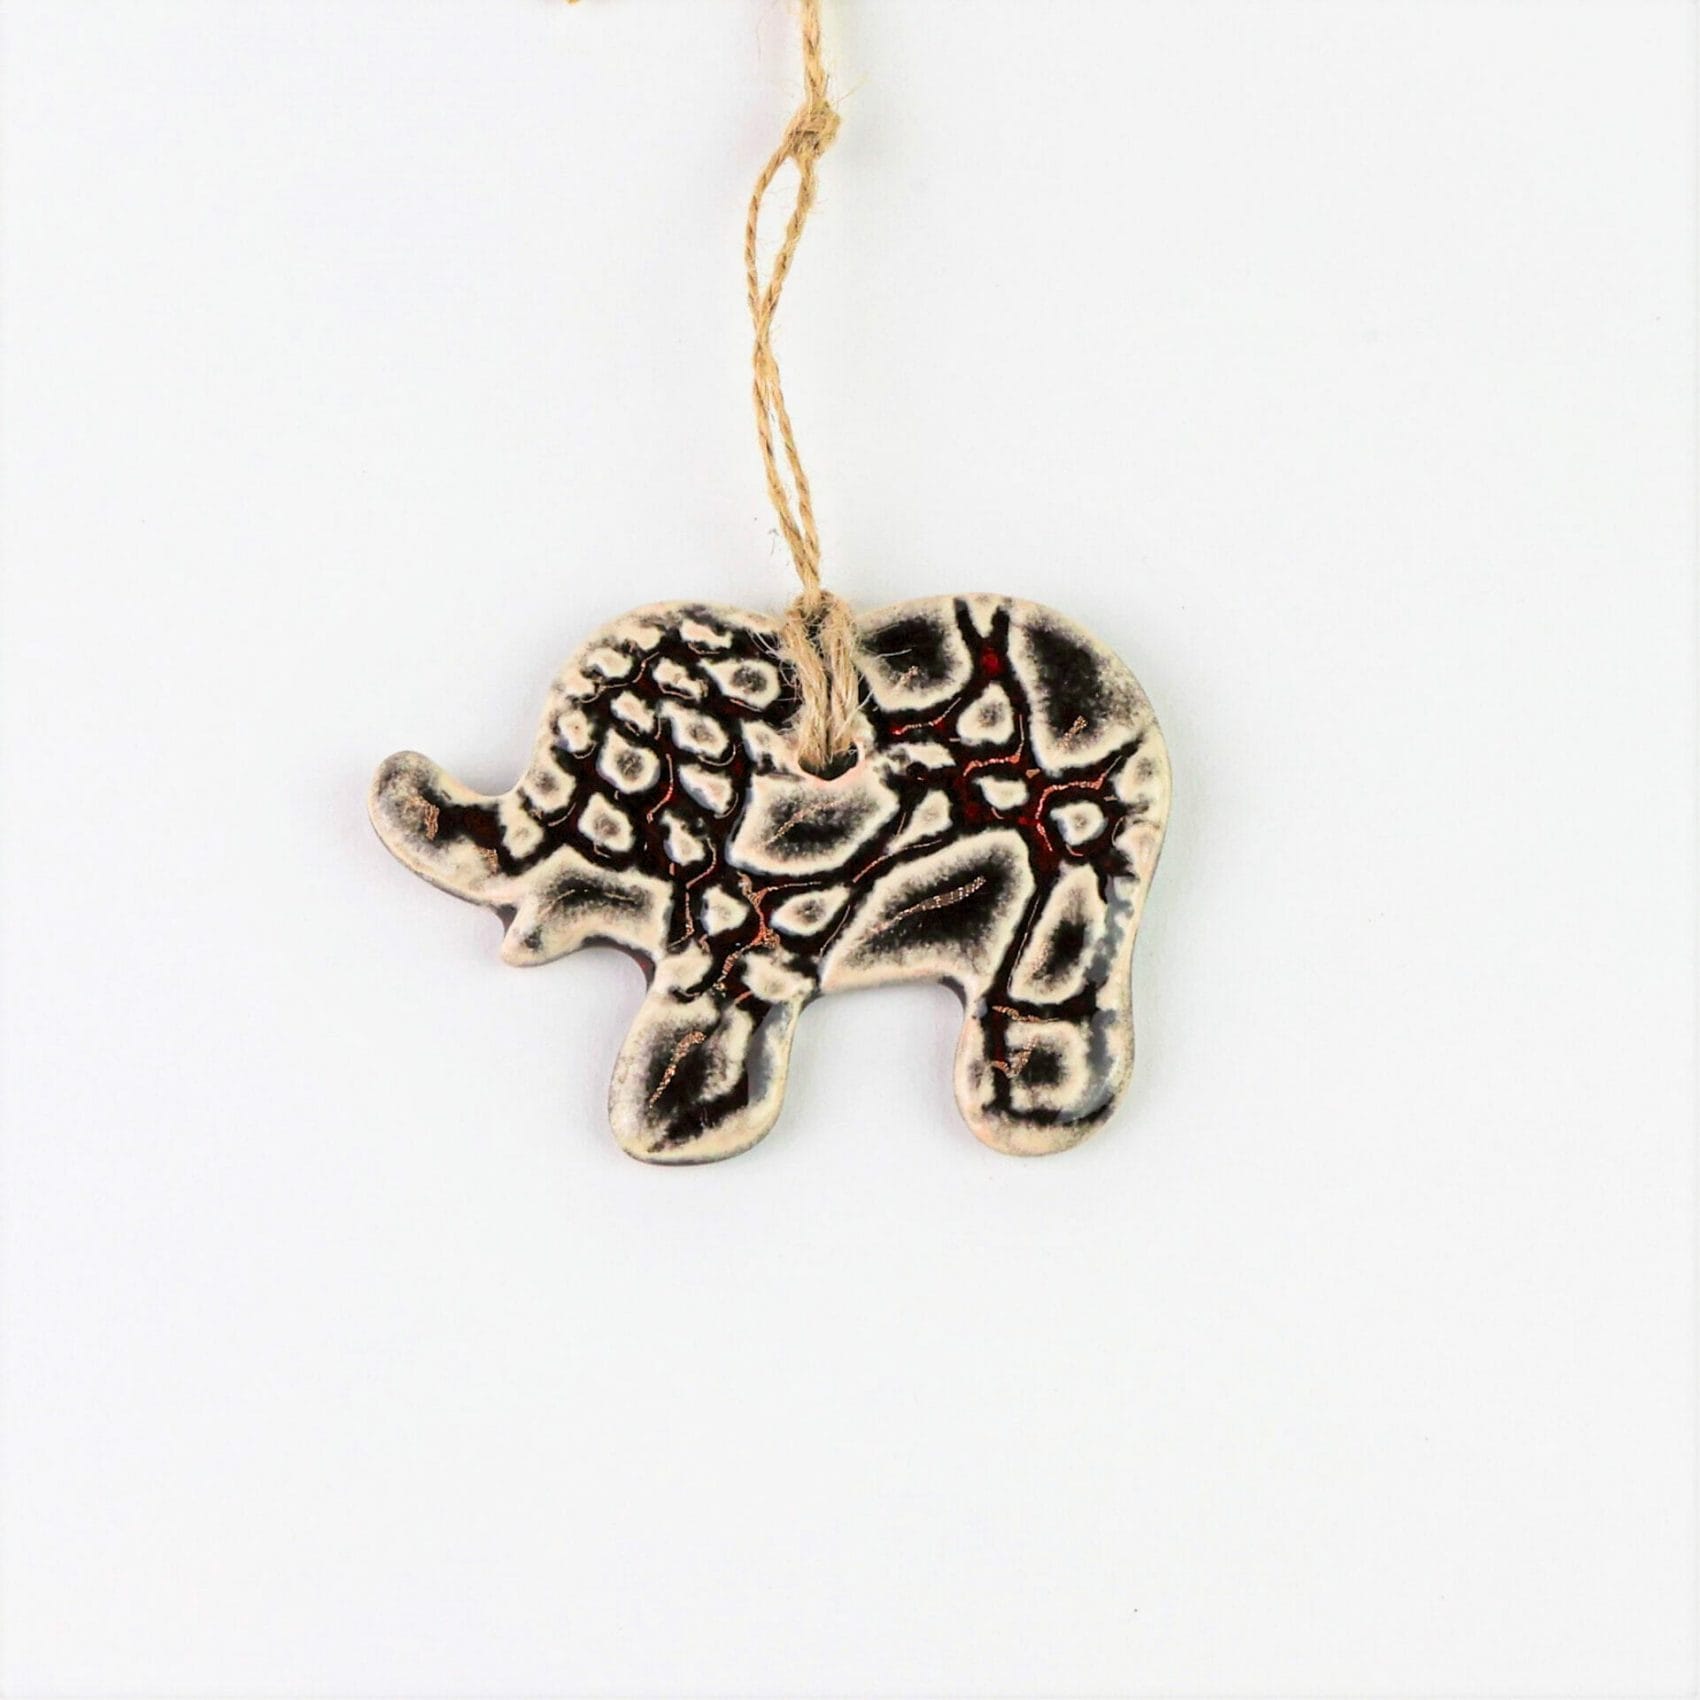 Custom ornament in the shape of an elephant